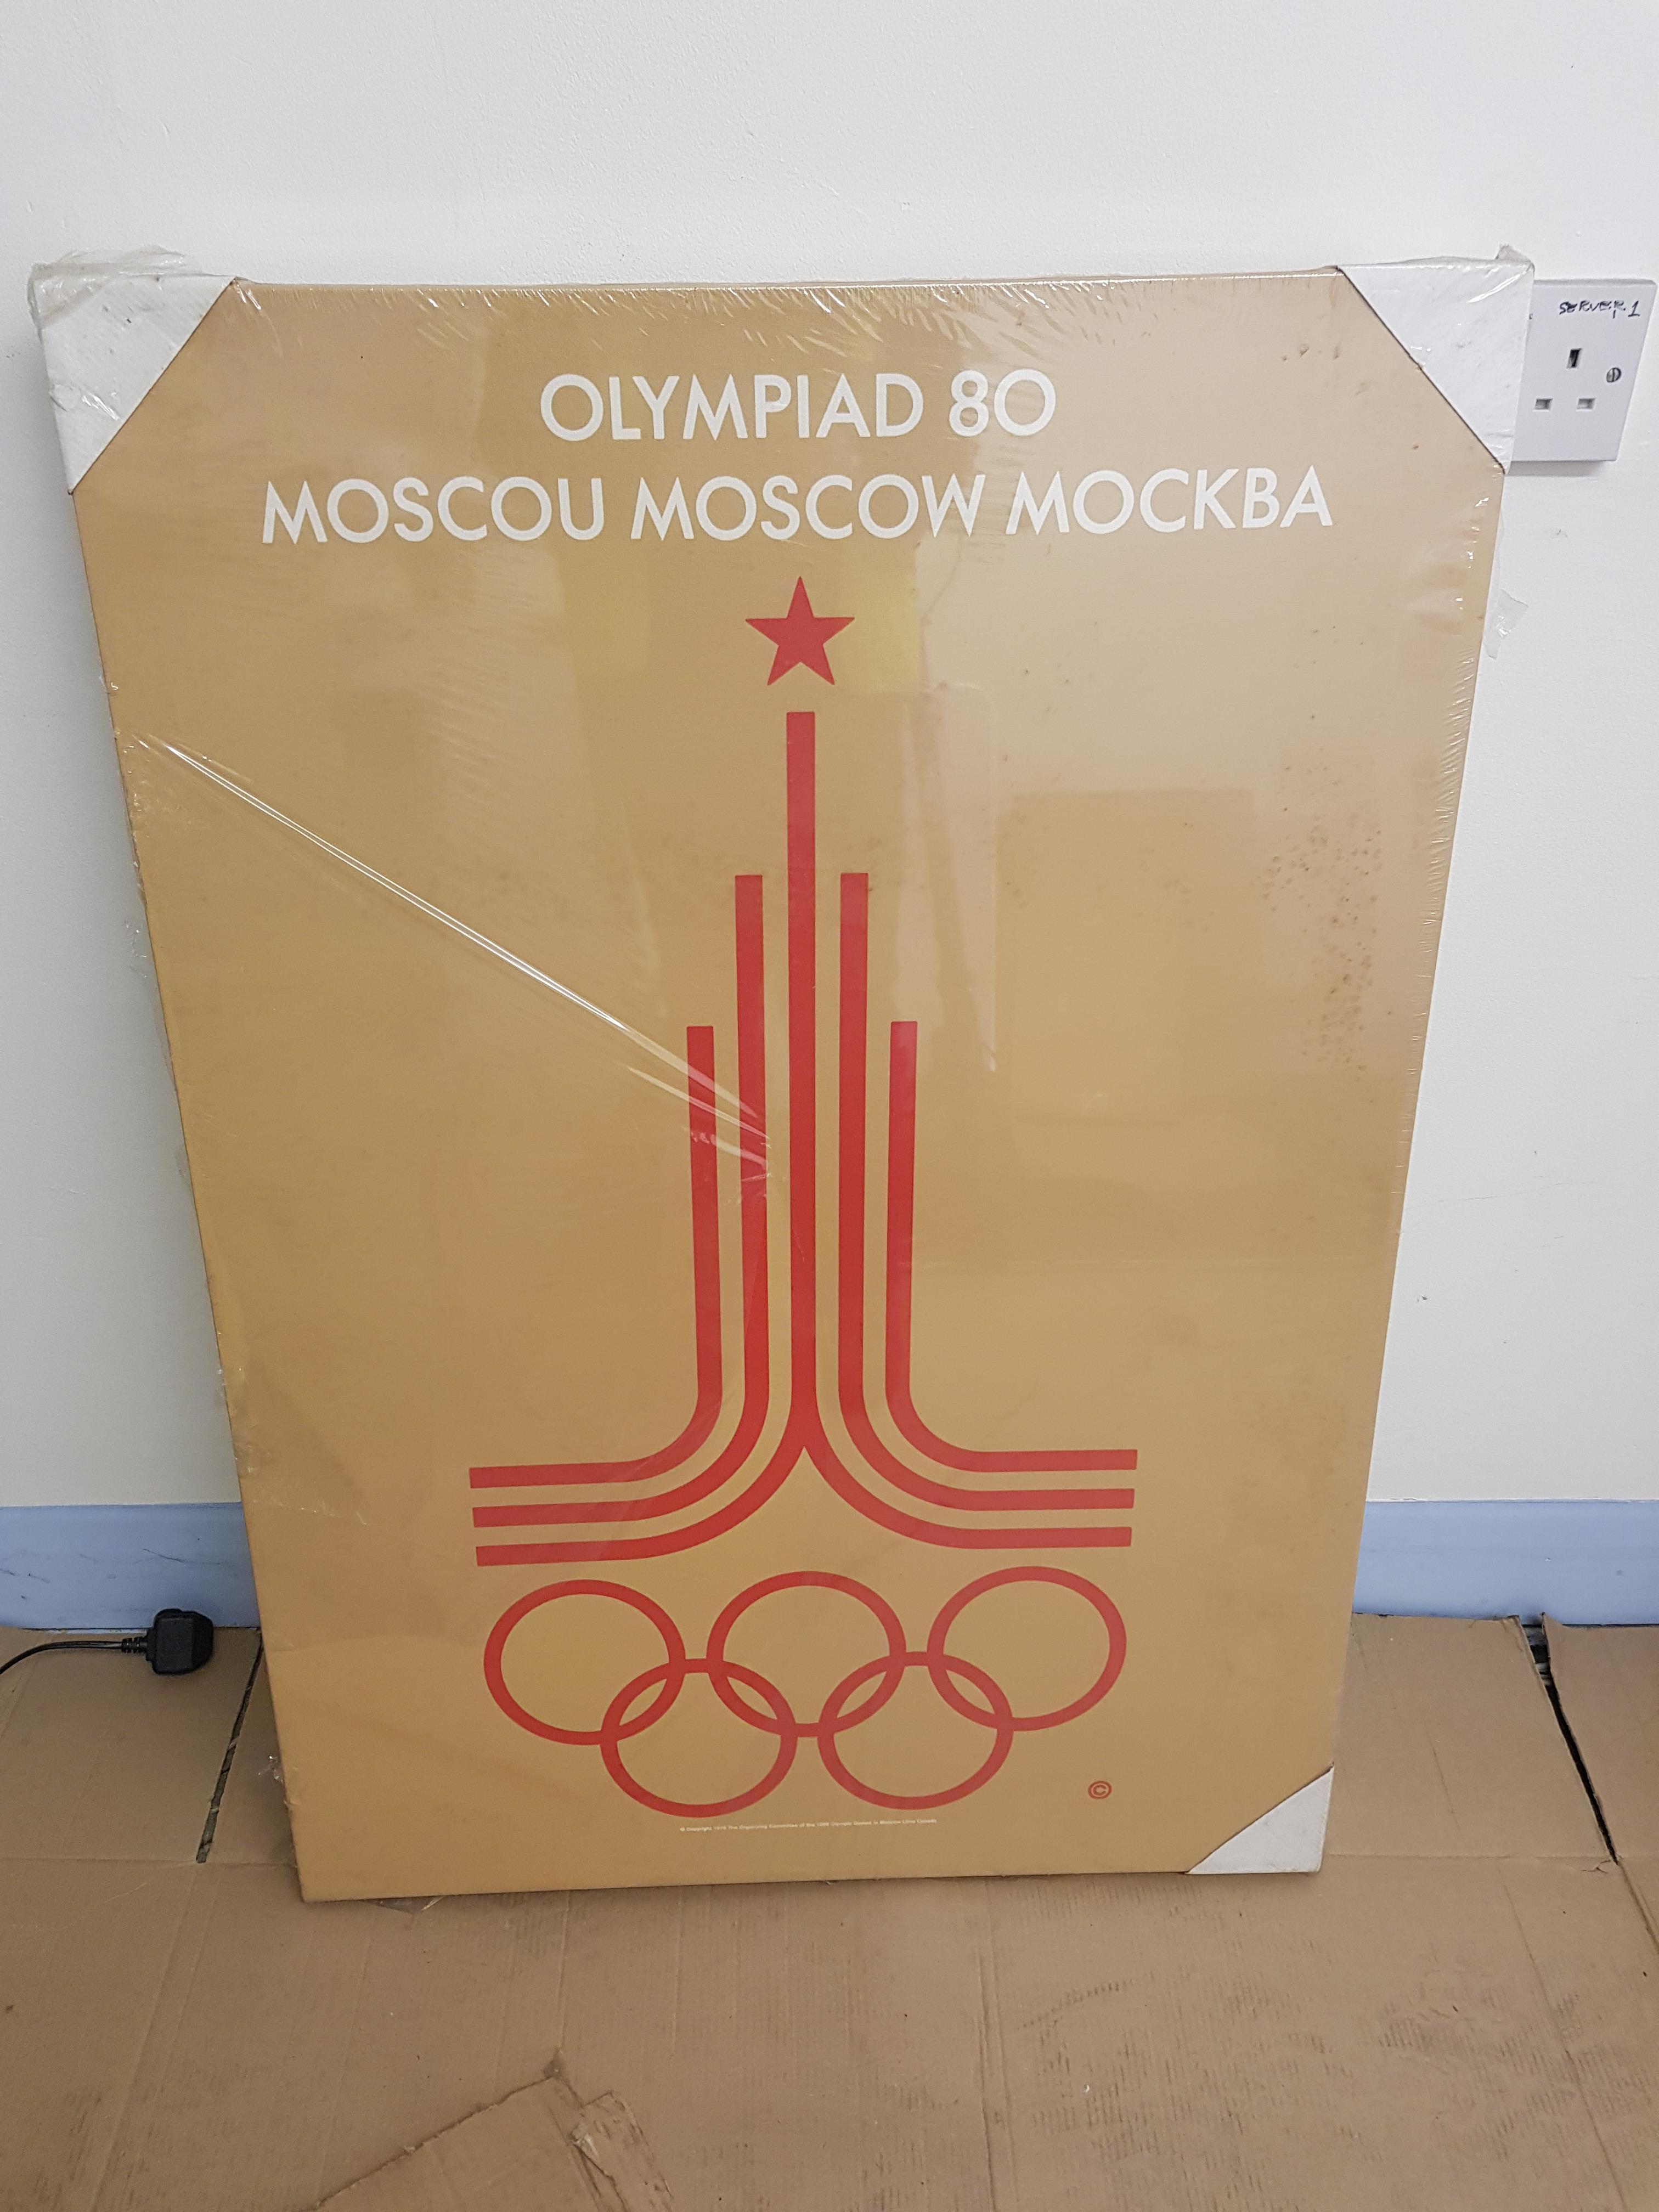 Barn Find. Olympiad 80 Moscou Moscow Mockbw Olympic Games Canvas Print. (1000 x 700 x 45mm). With o